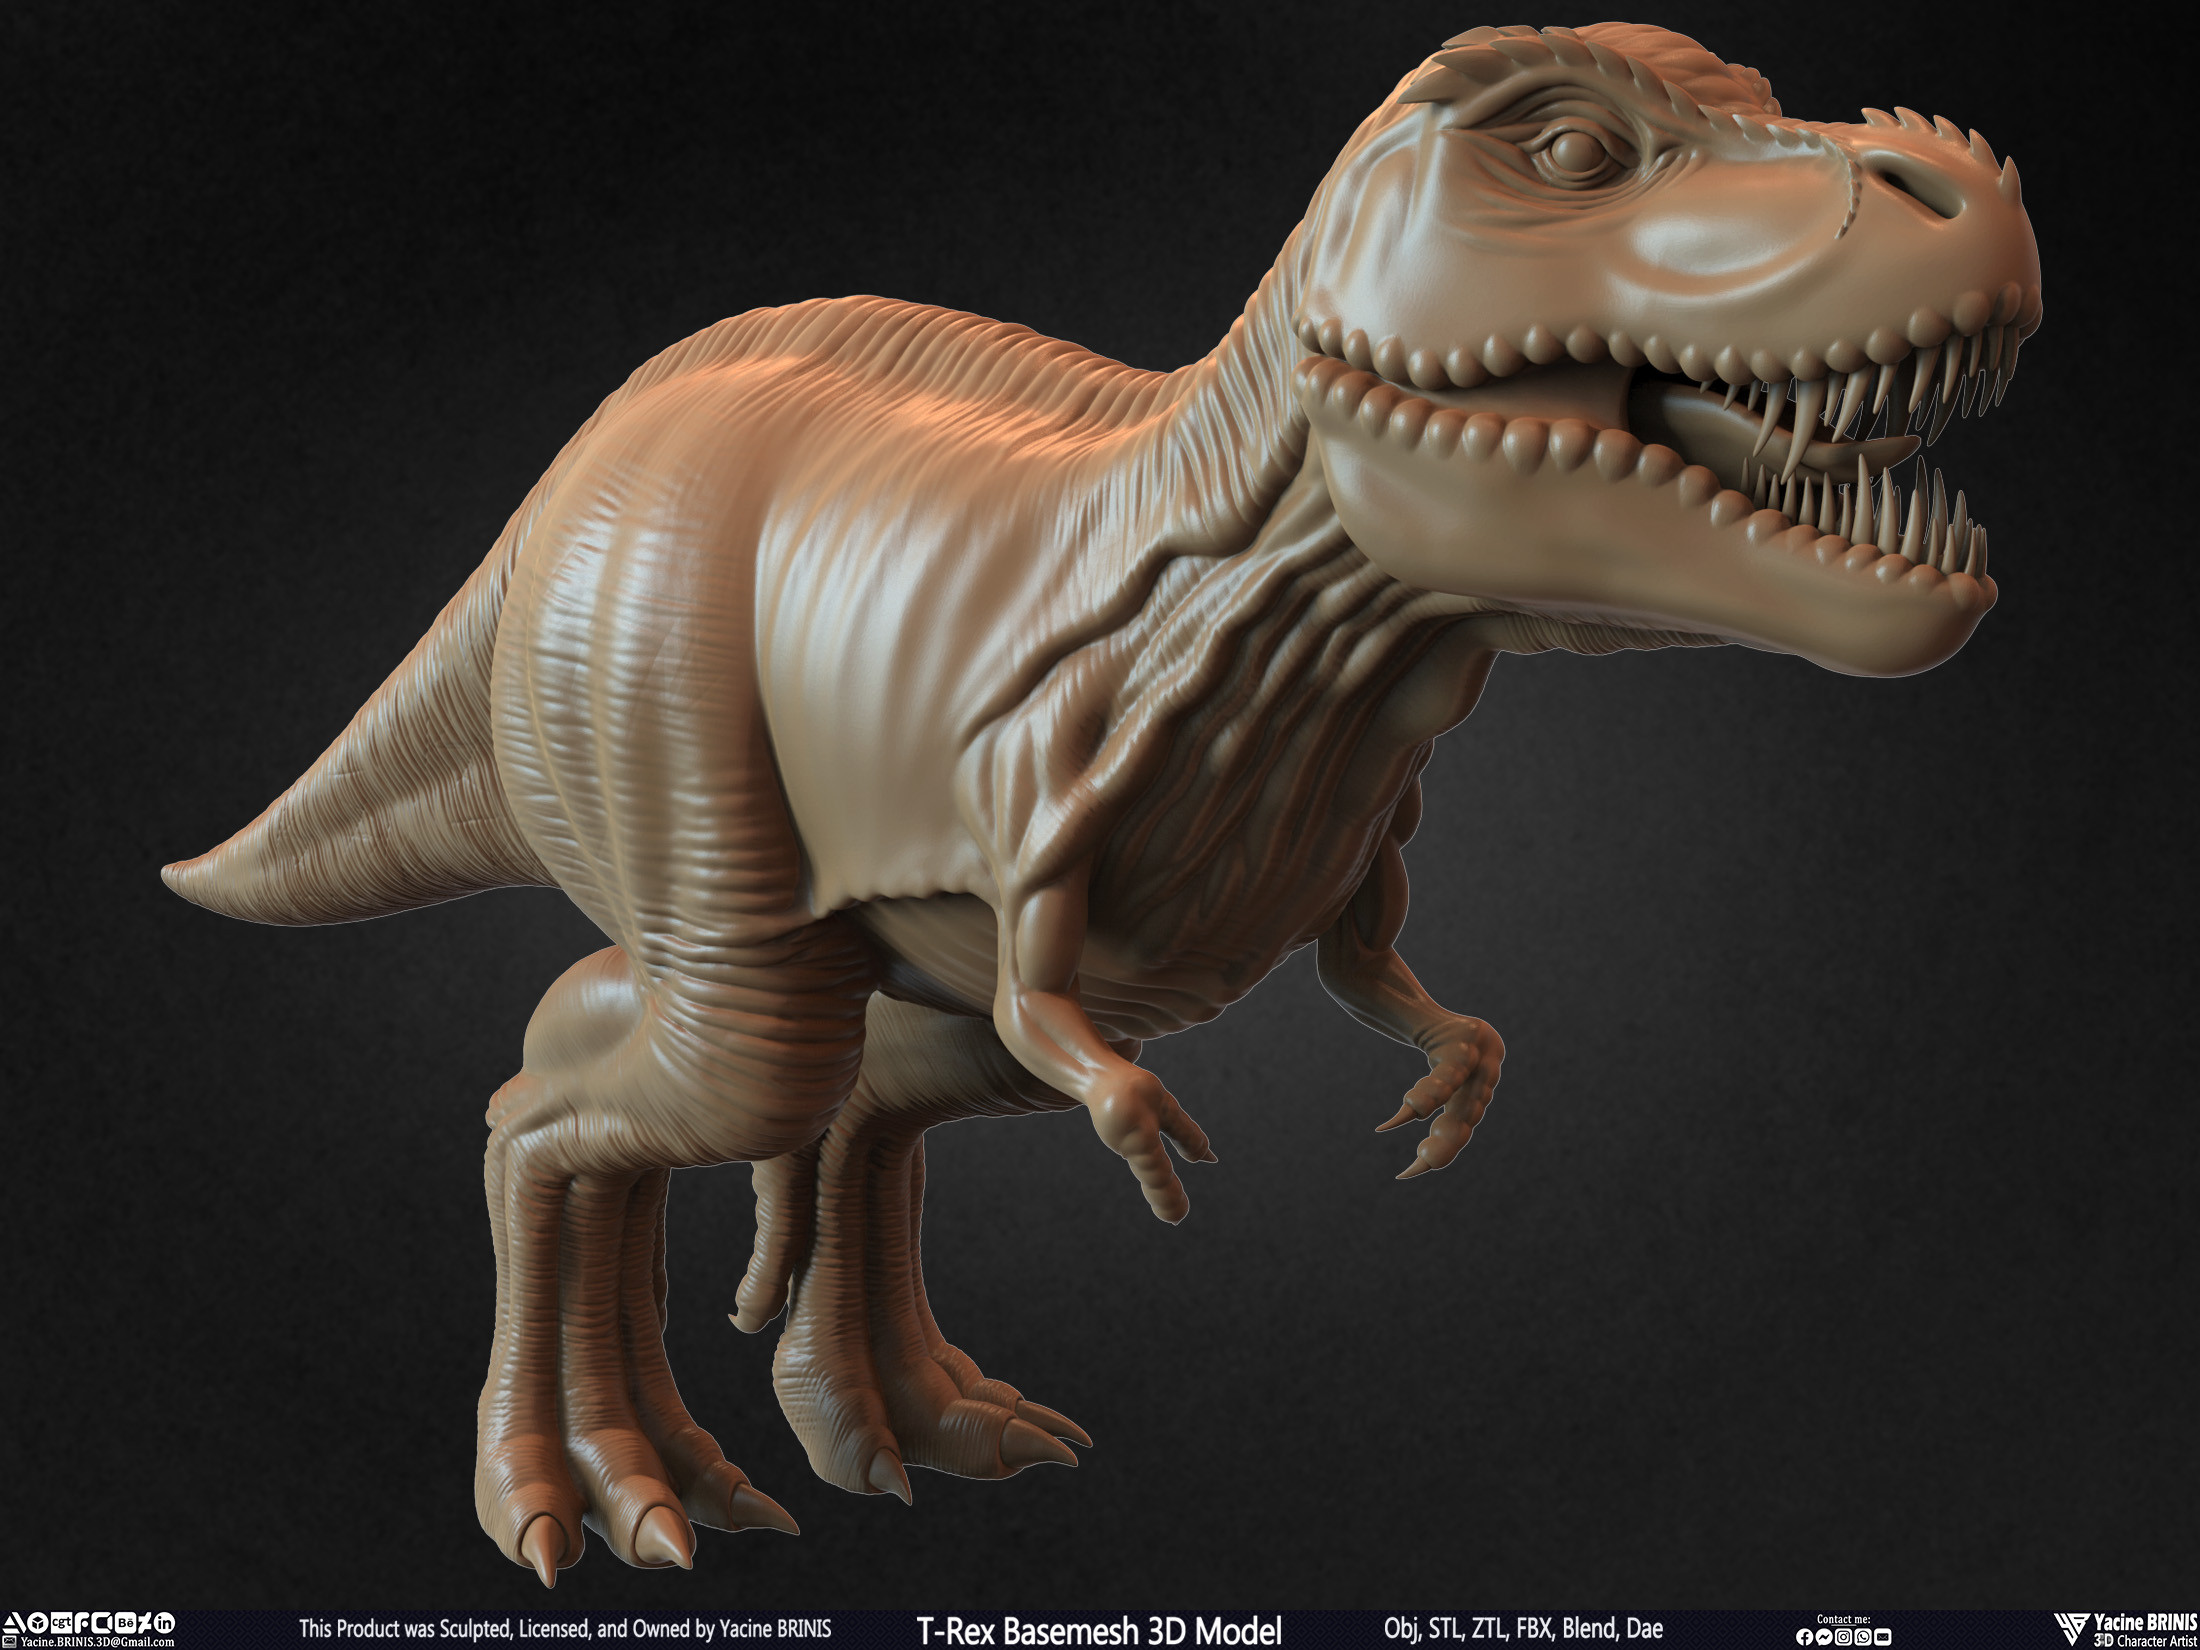 T-Rex Basemesh 3D Model (Tyrannosaurus Rex) Sculpted By Yacine BRINIS Set 003